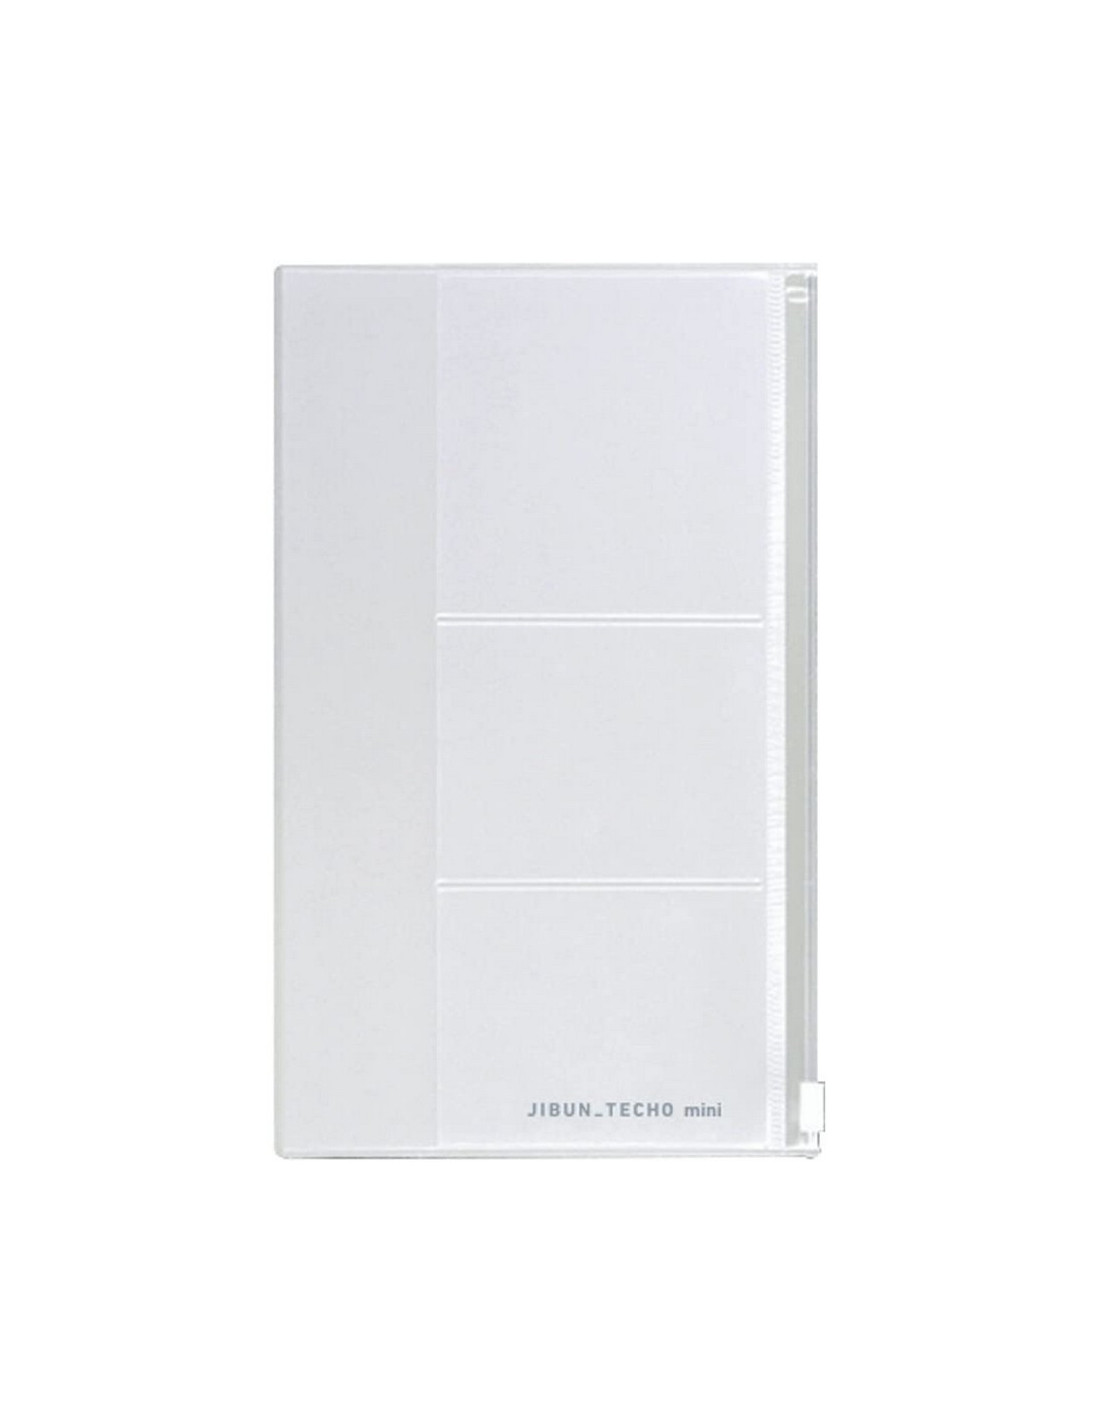 Kokuyo Jibun Techo Accessory - Film Sticky Notes - Mini B6 Slim